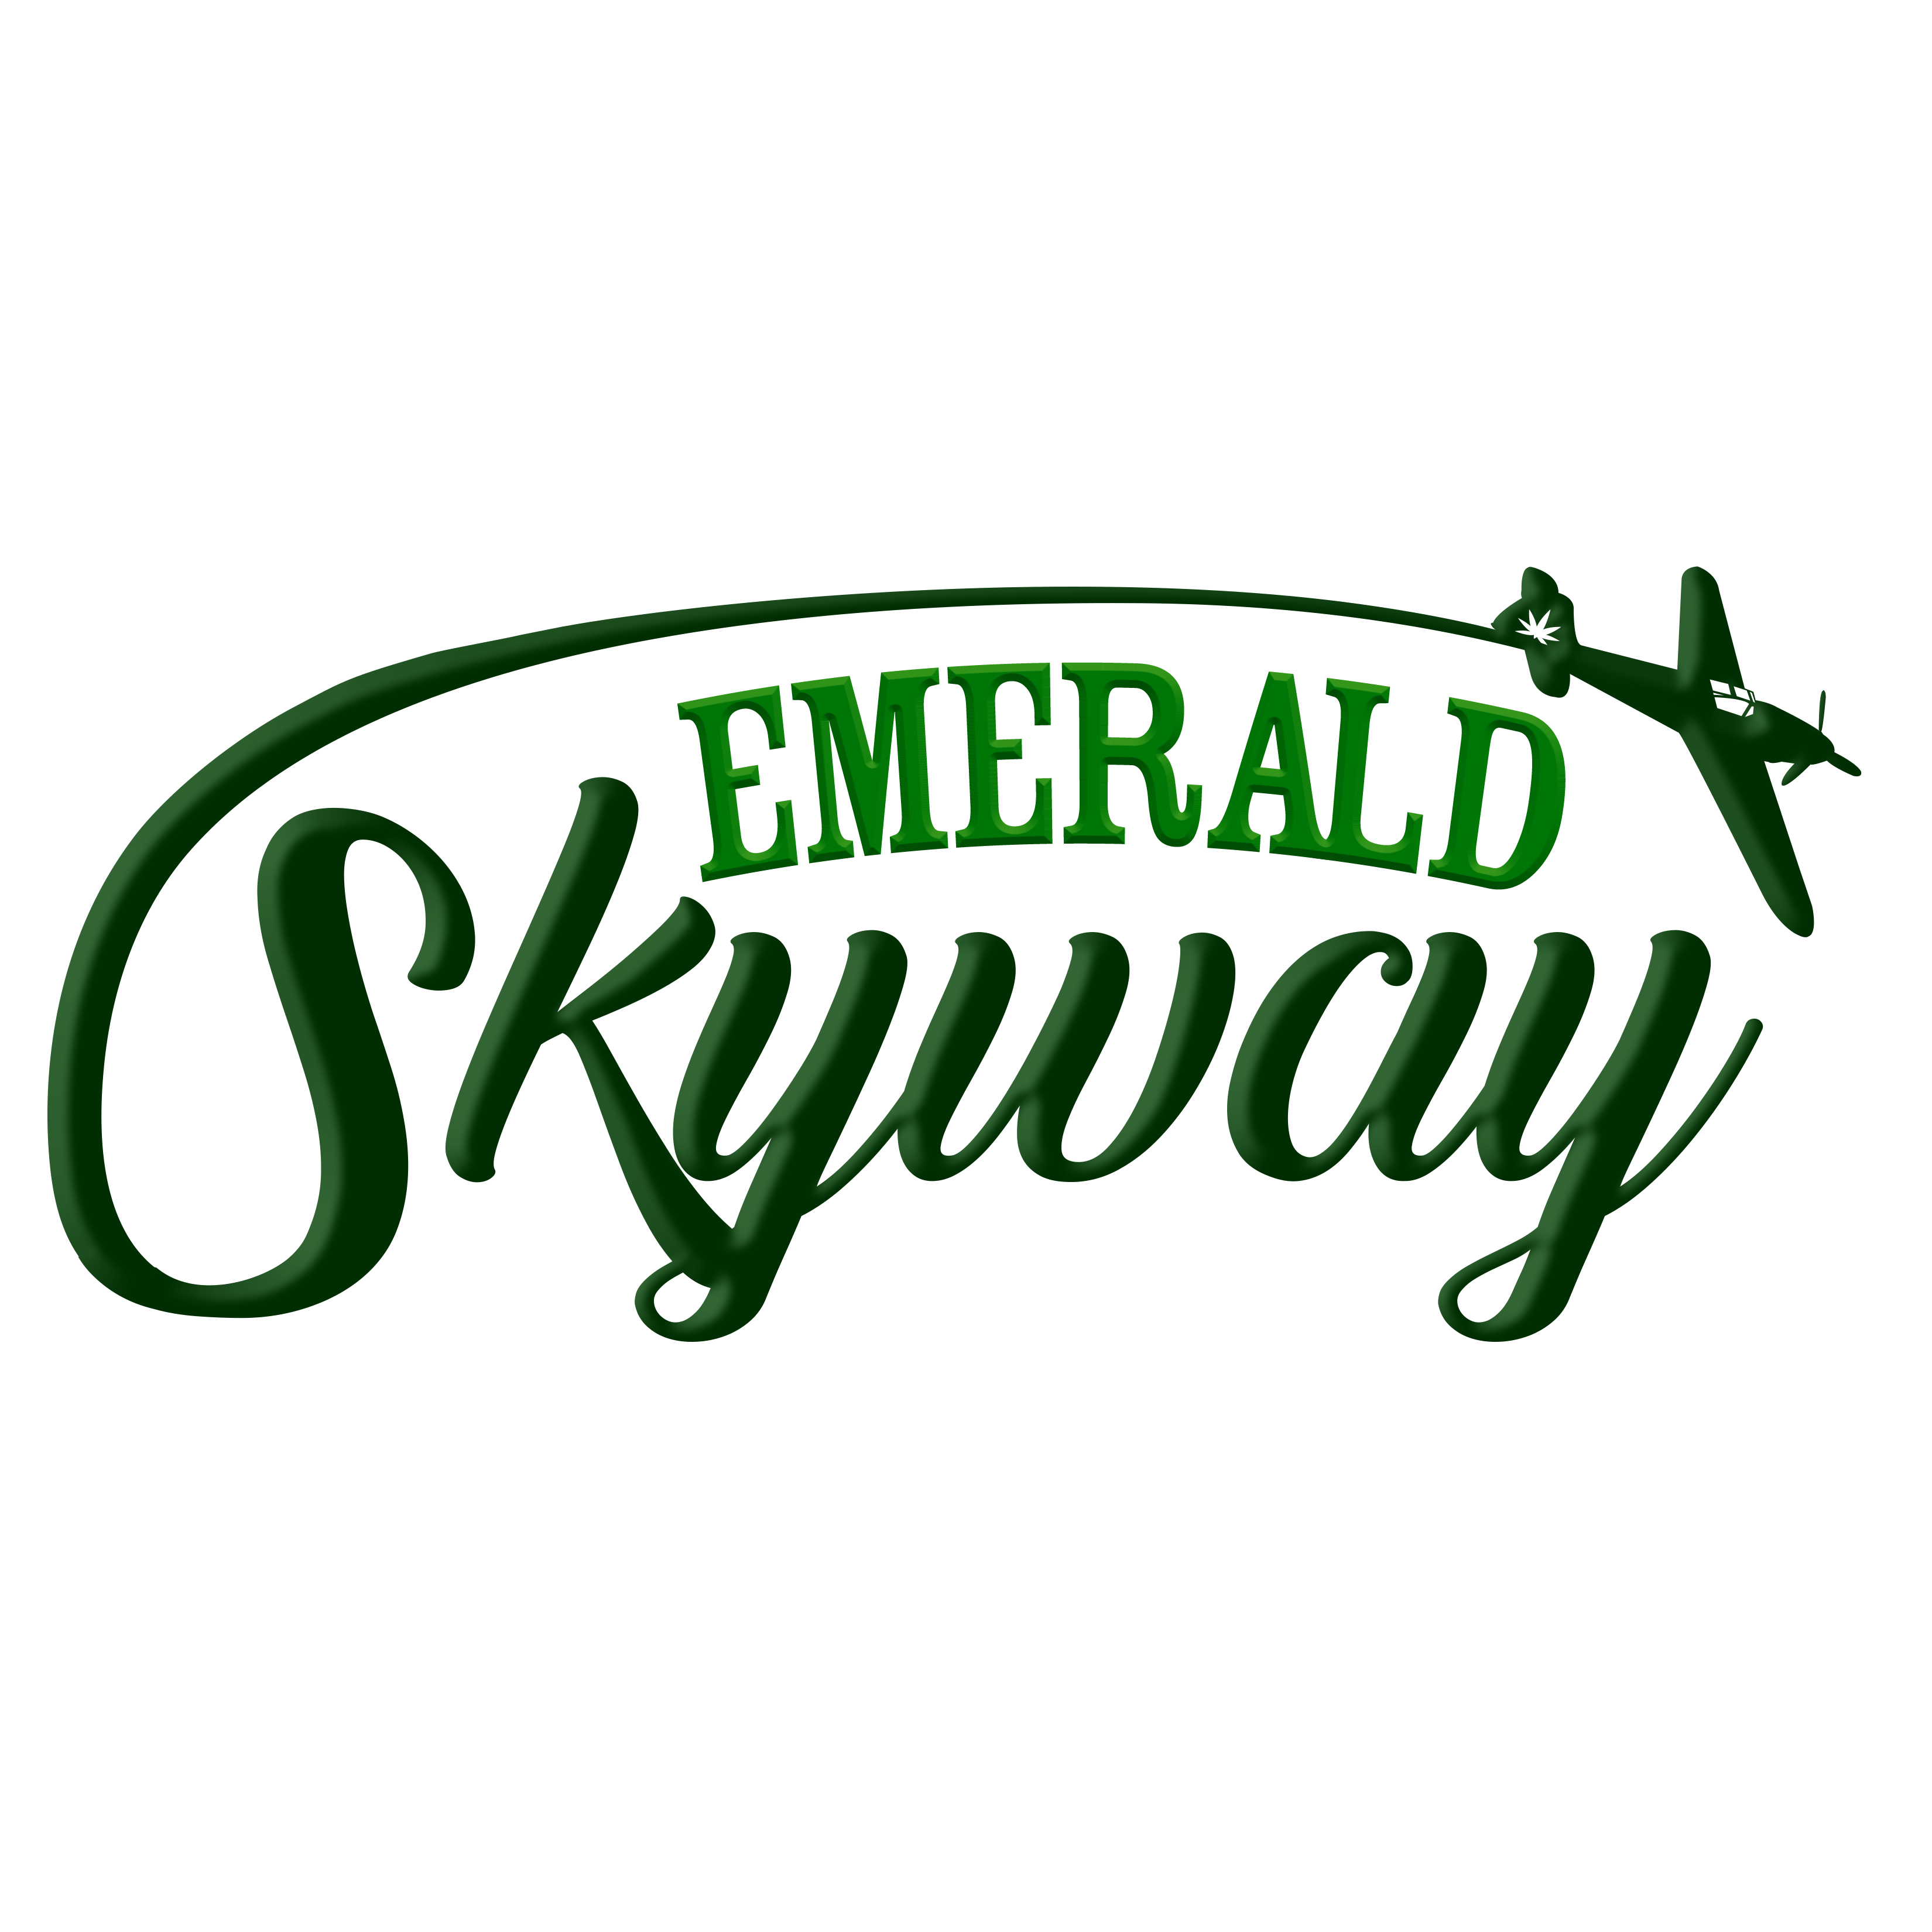 Emerald Skyway - Medical Marijuana Doctors - Cannabizme.com